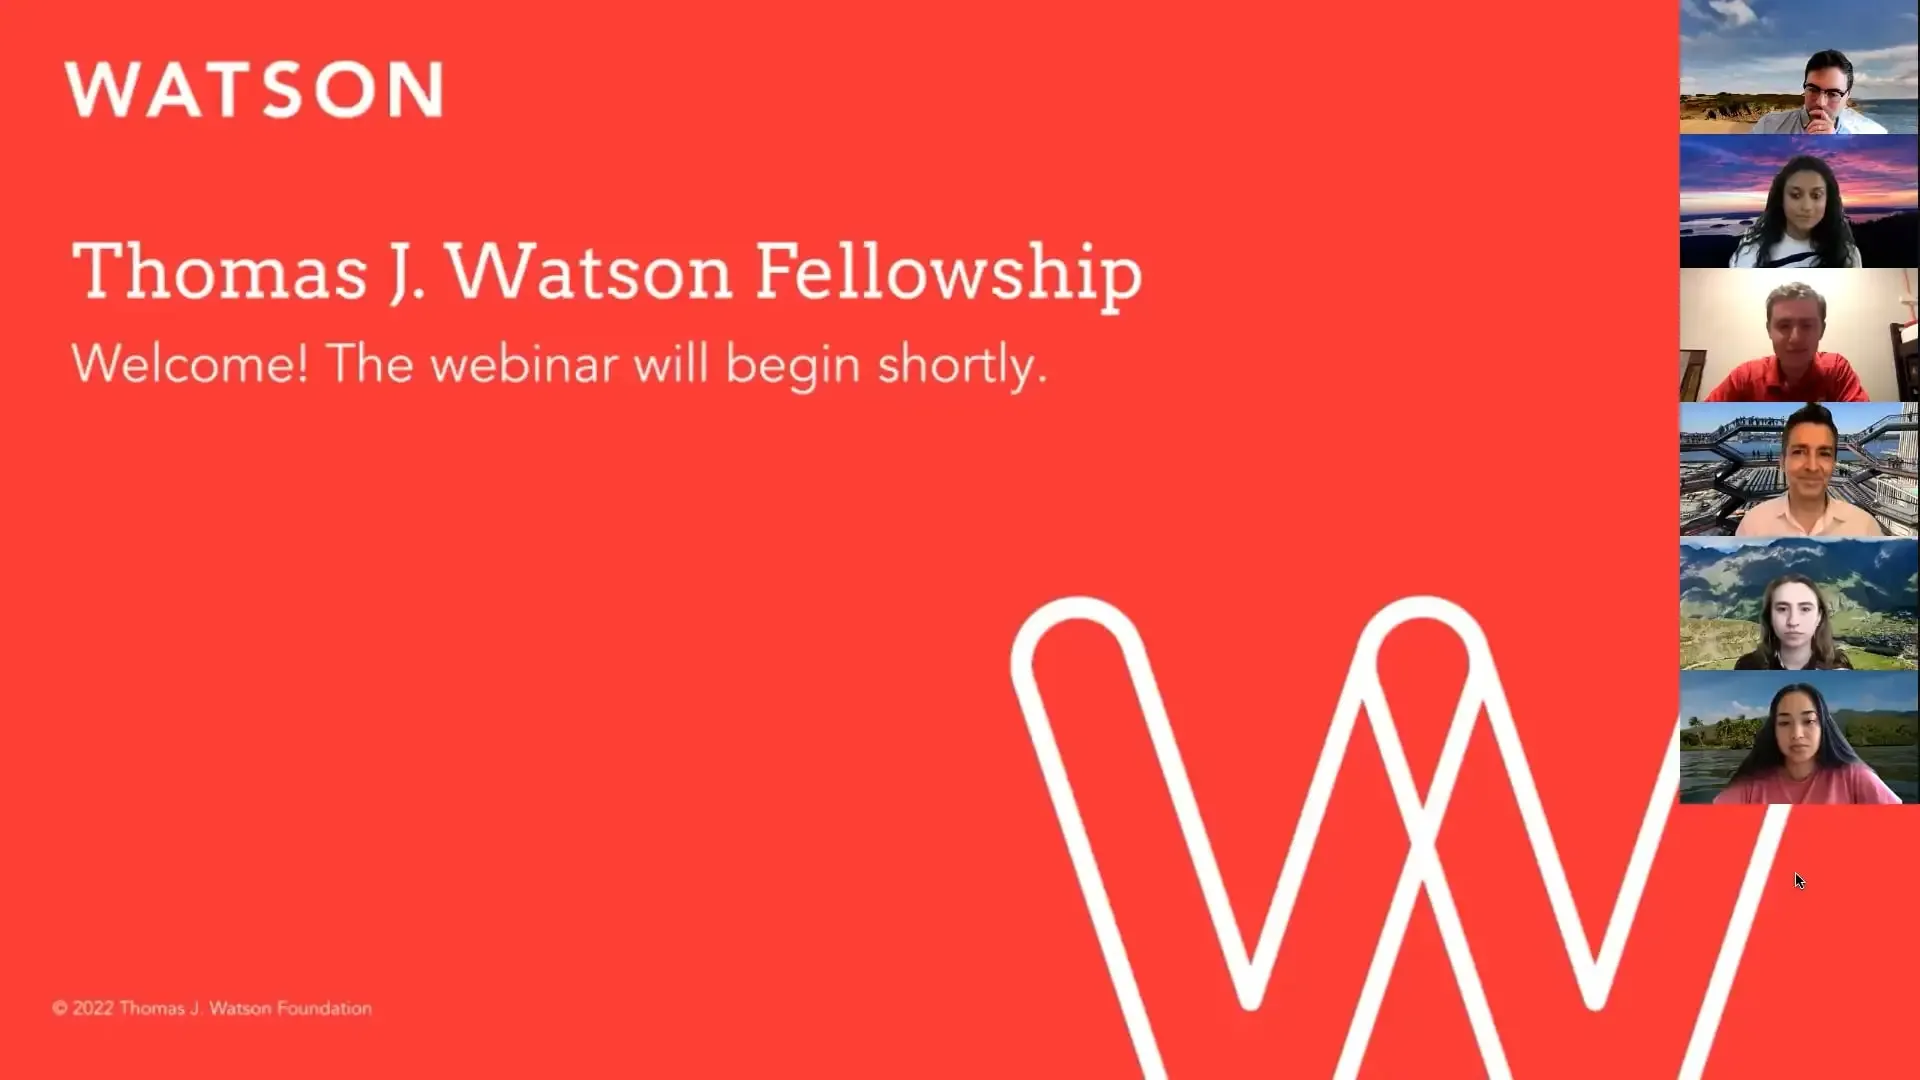 Thomas J. Watson Fellowship